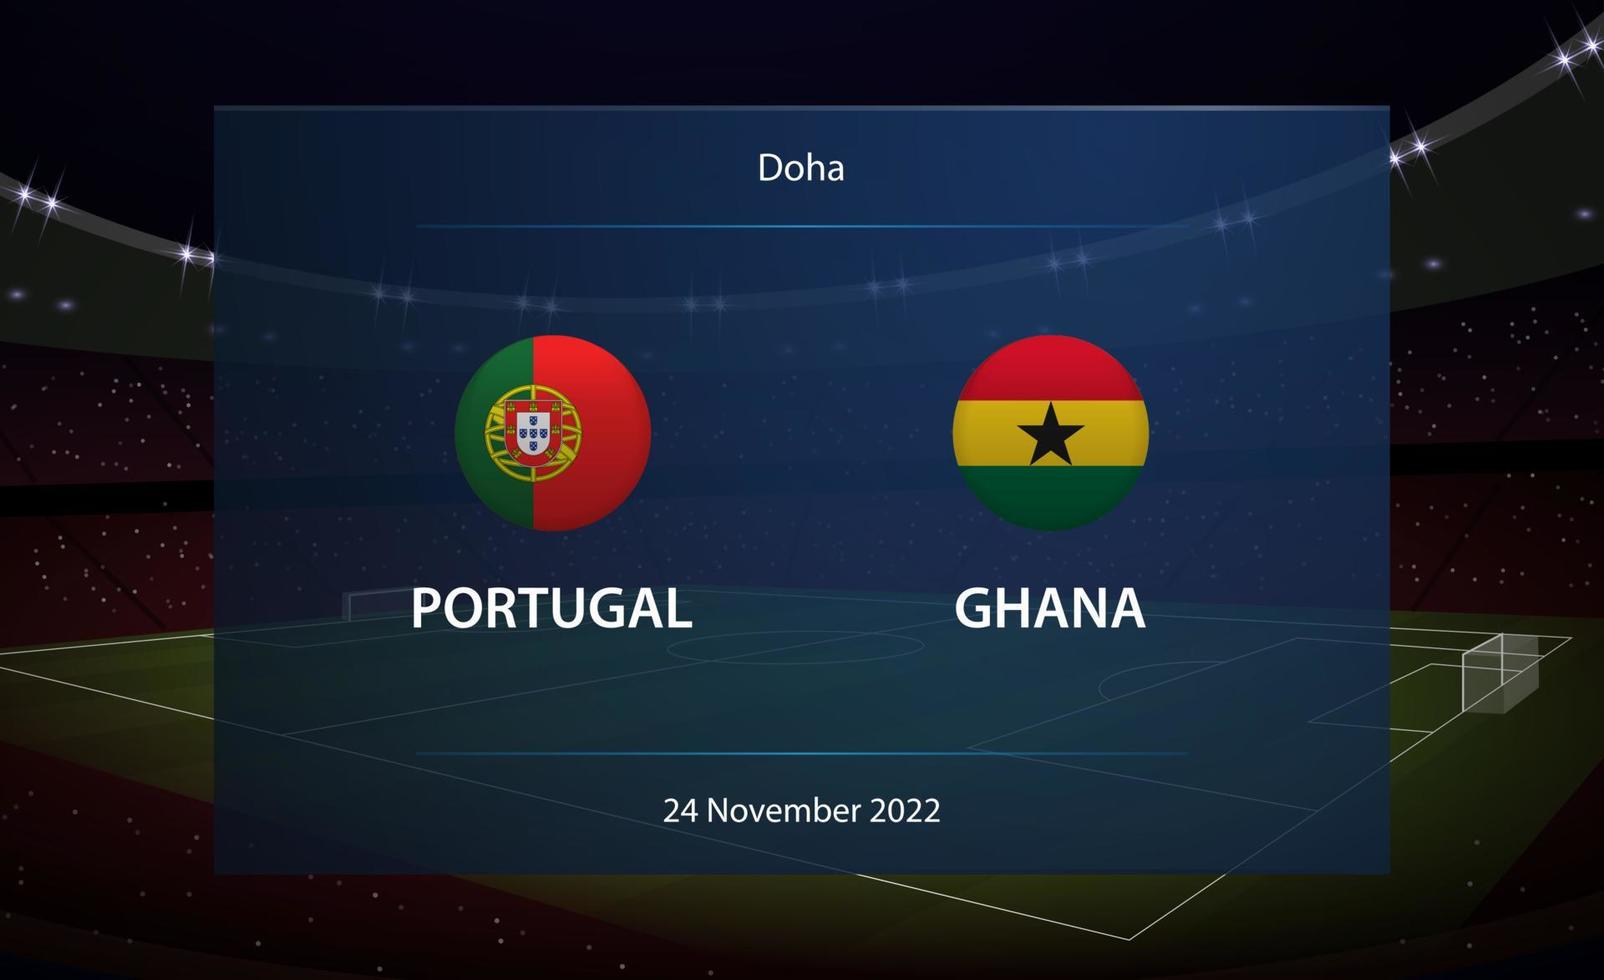 Portugal vs Ghana. fútbol americano marcador transmitir gráfico vector